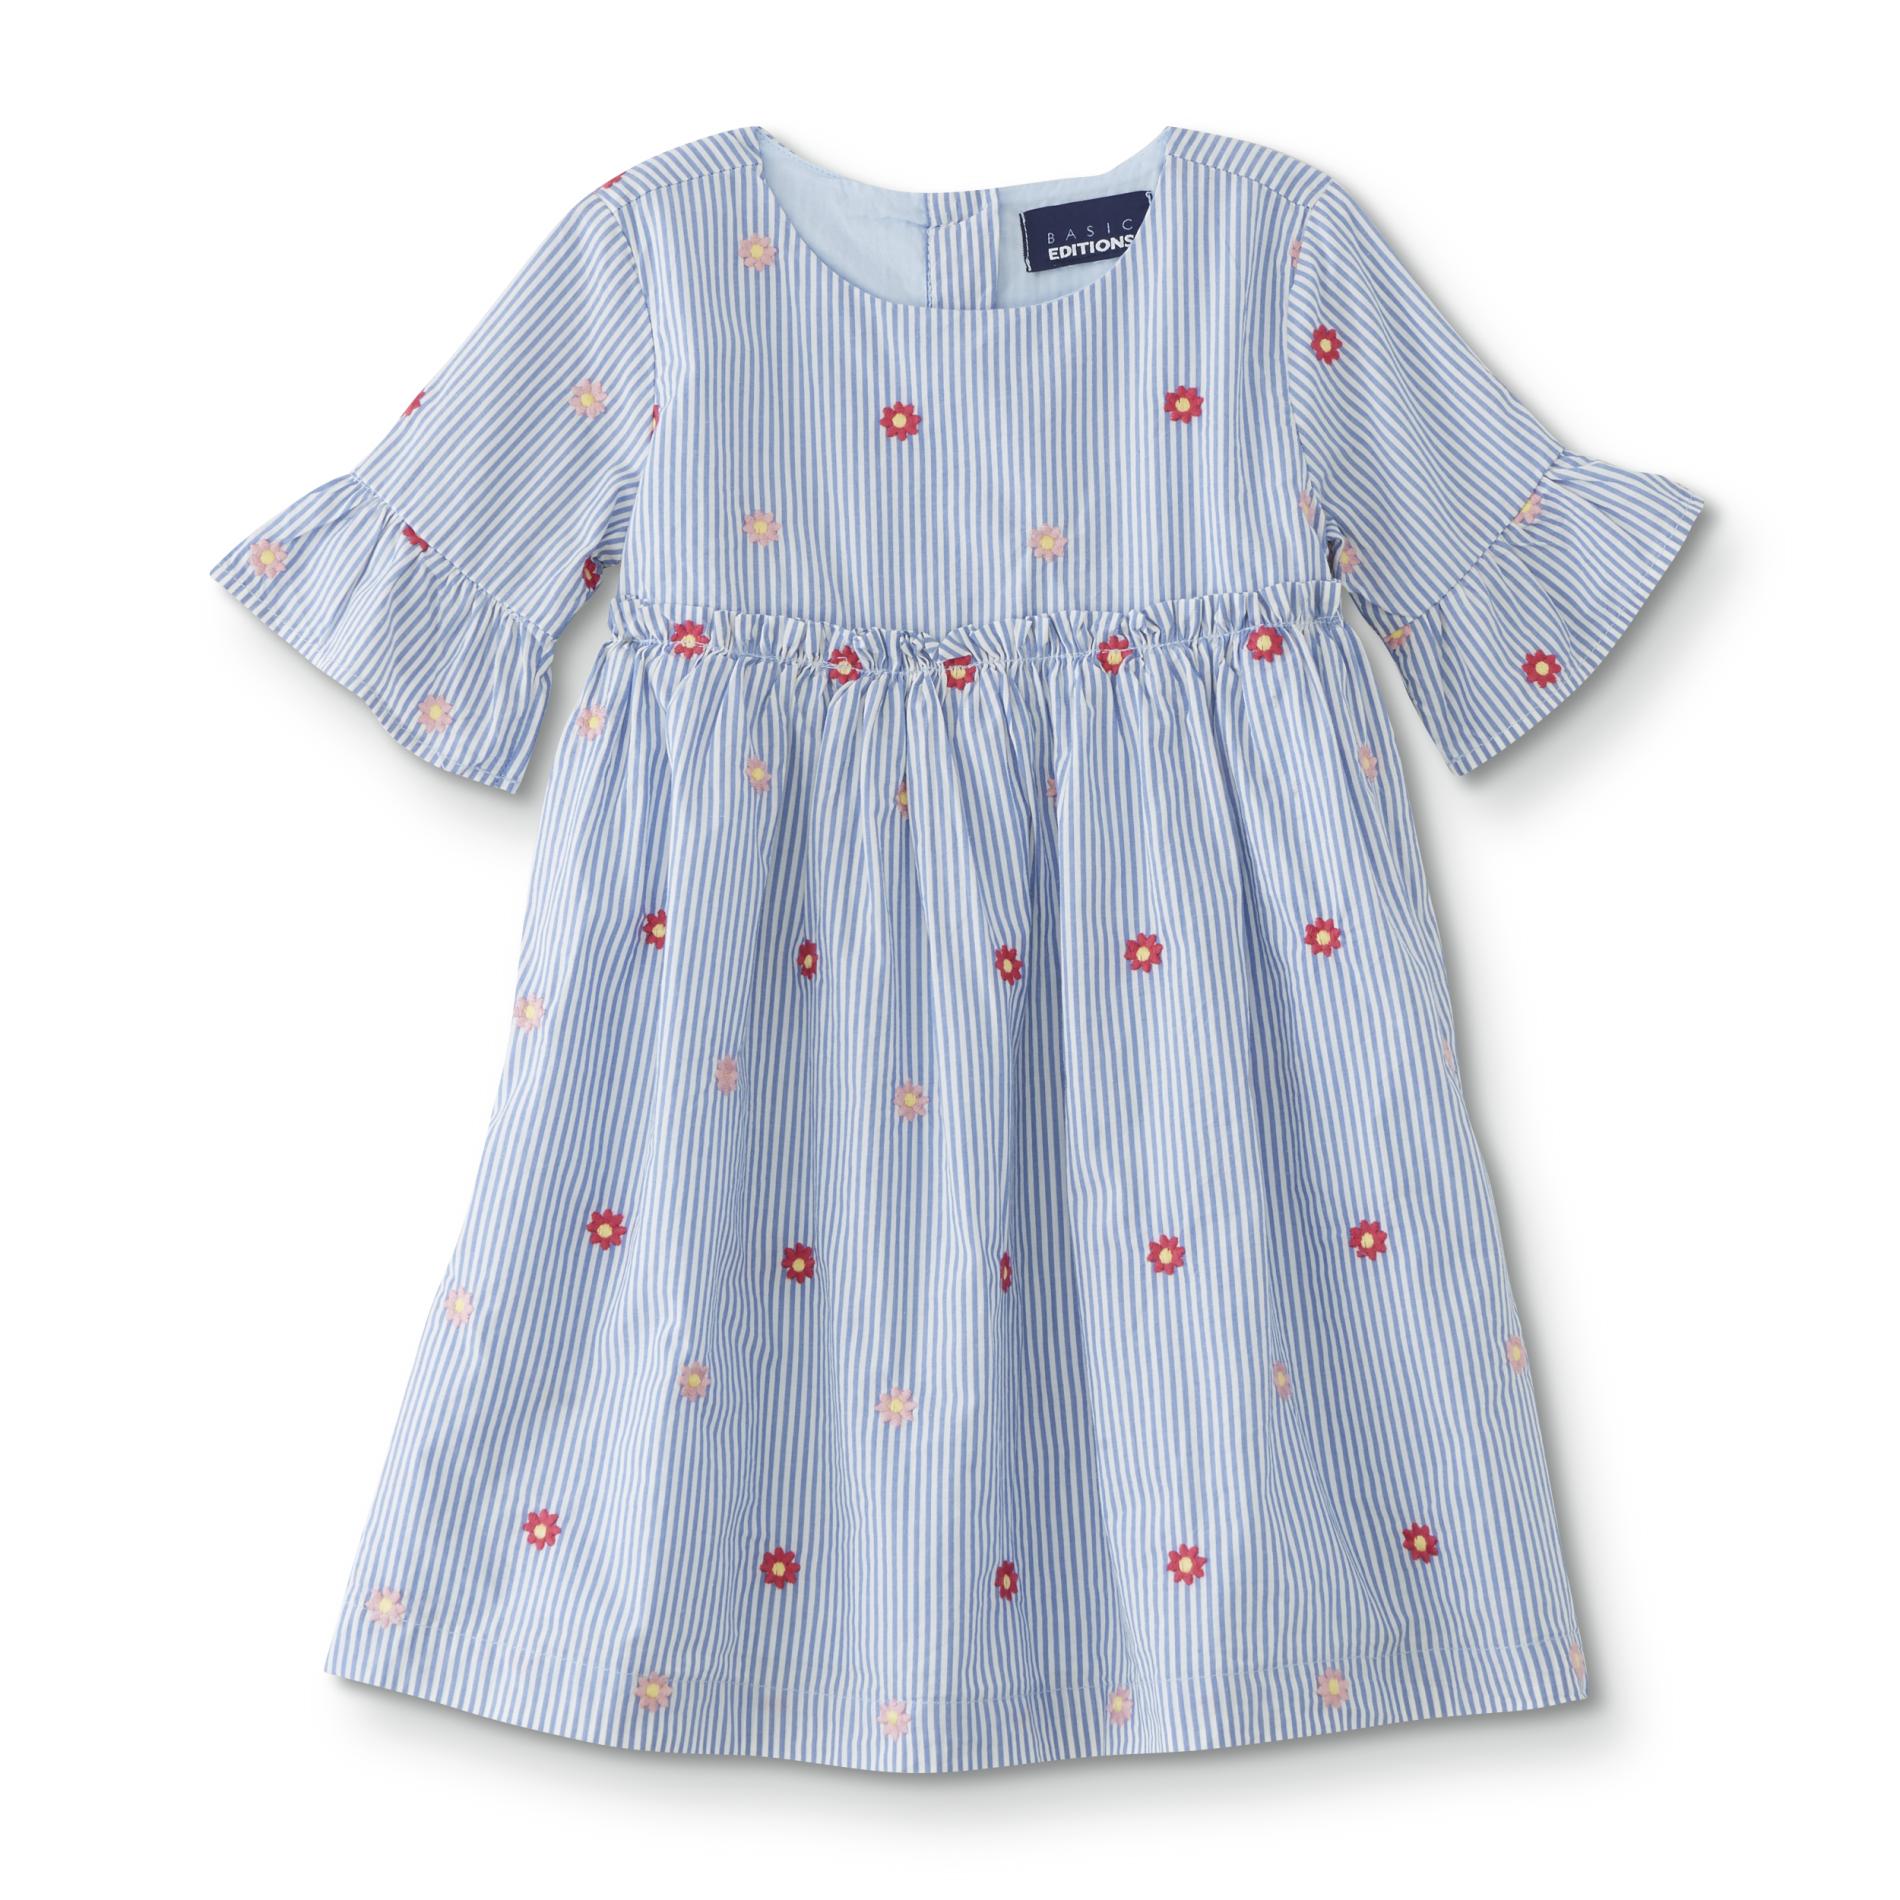 Special Editions Infant & Toddler Girls' Smock Dress - Striped/Floral